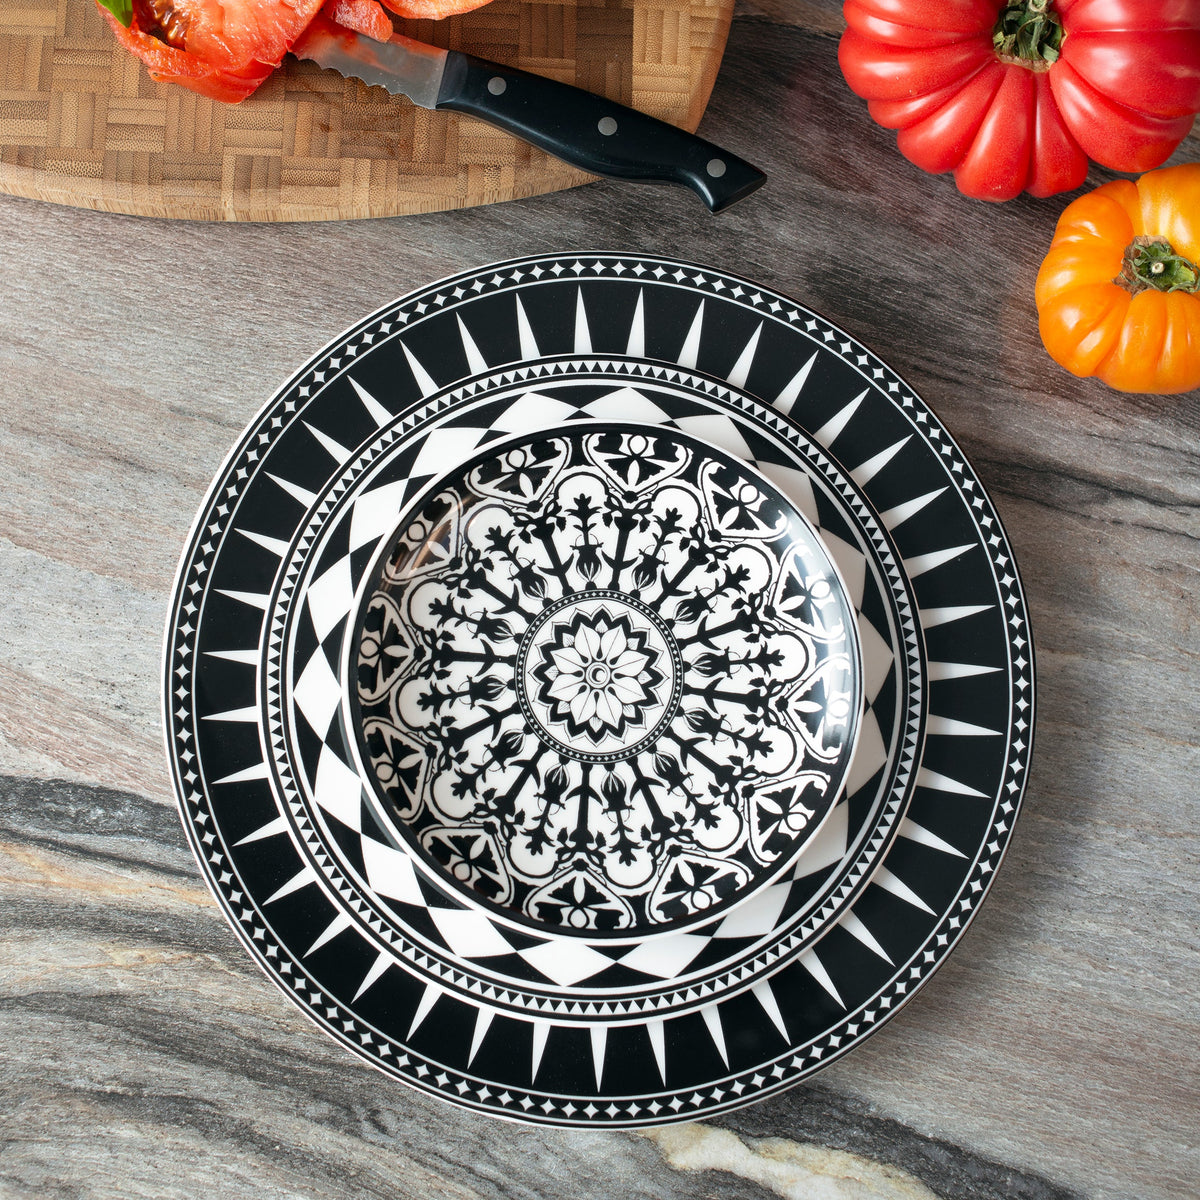 A Marrakech Black Rimmed Dinner Plate inspired by Marrakech ceramics, made by Caskata Artisanal Home.